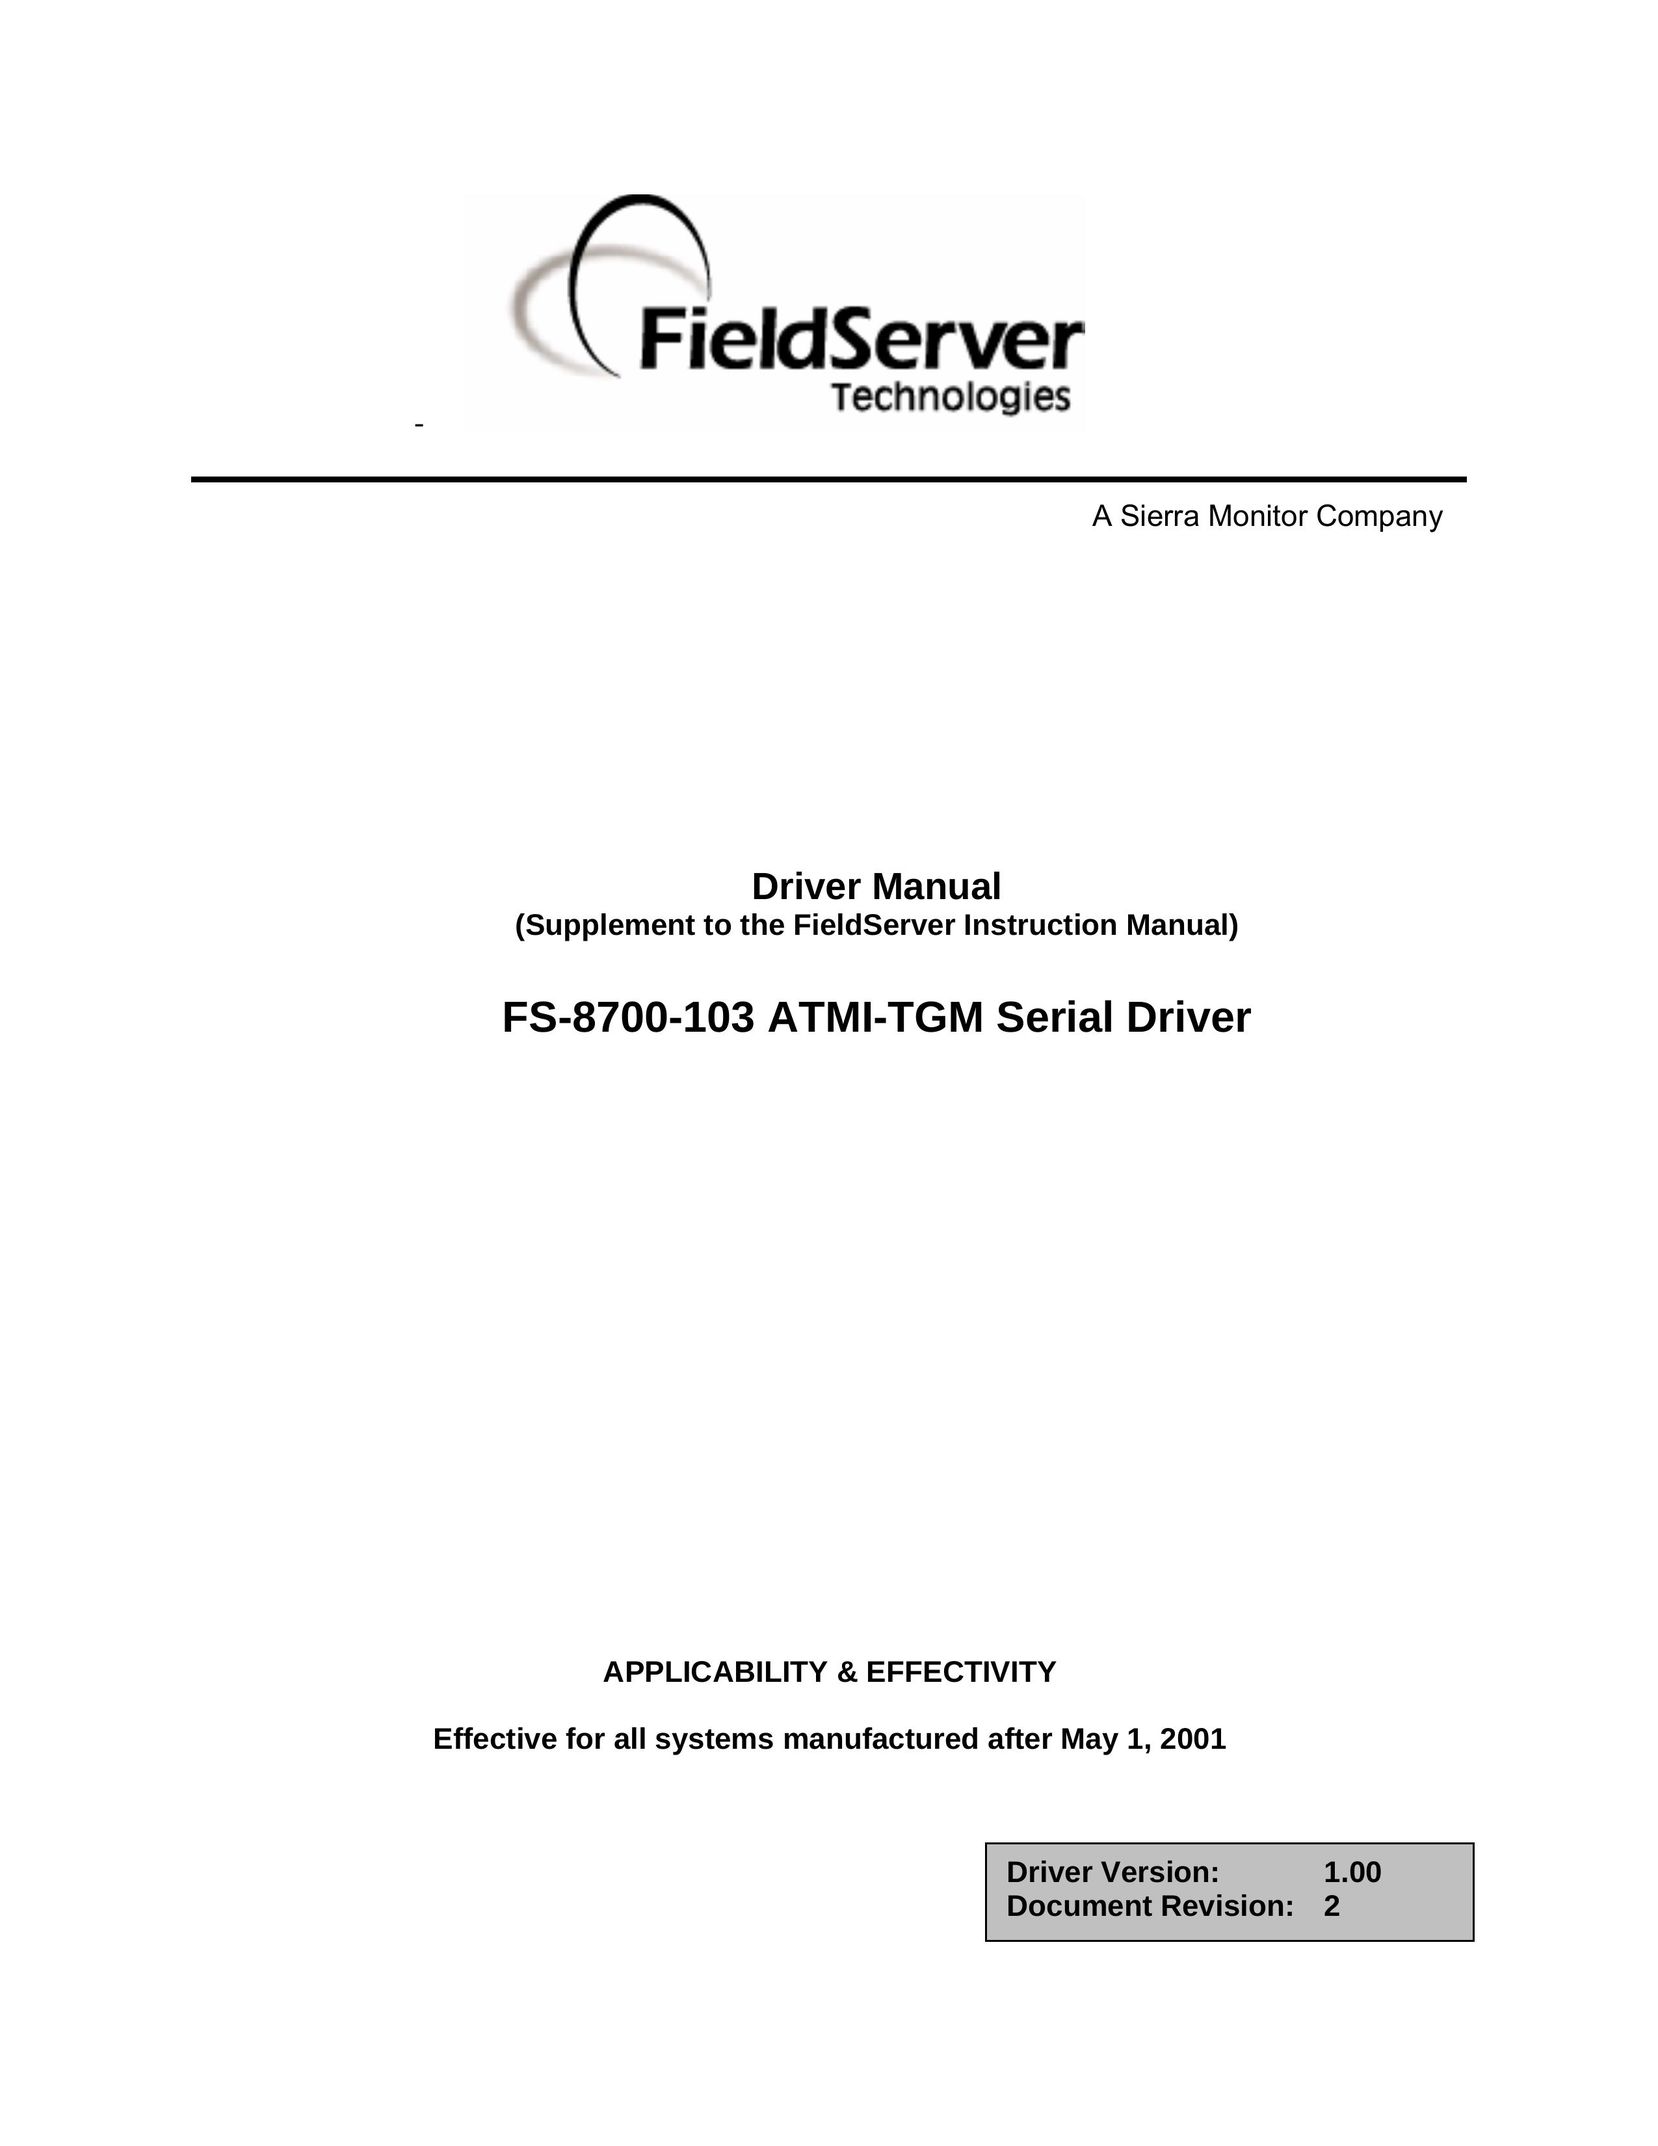 FieldServer FS-8700-103 Computer Drive User Manual